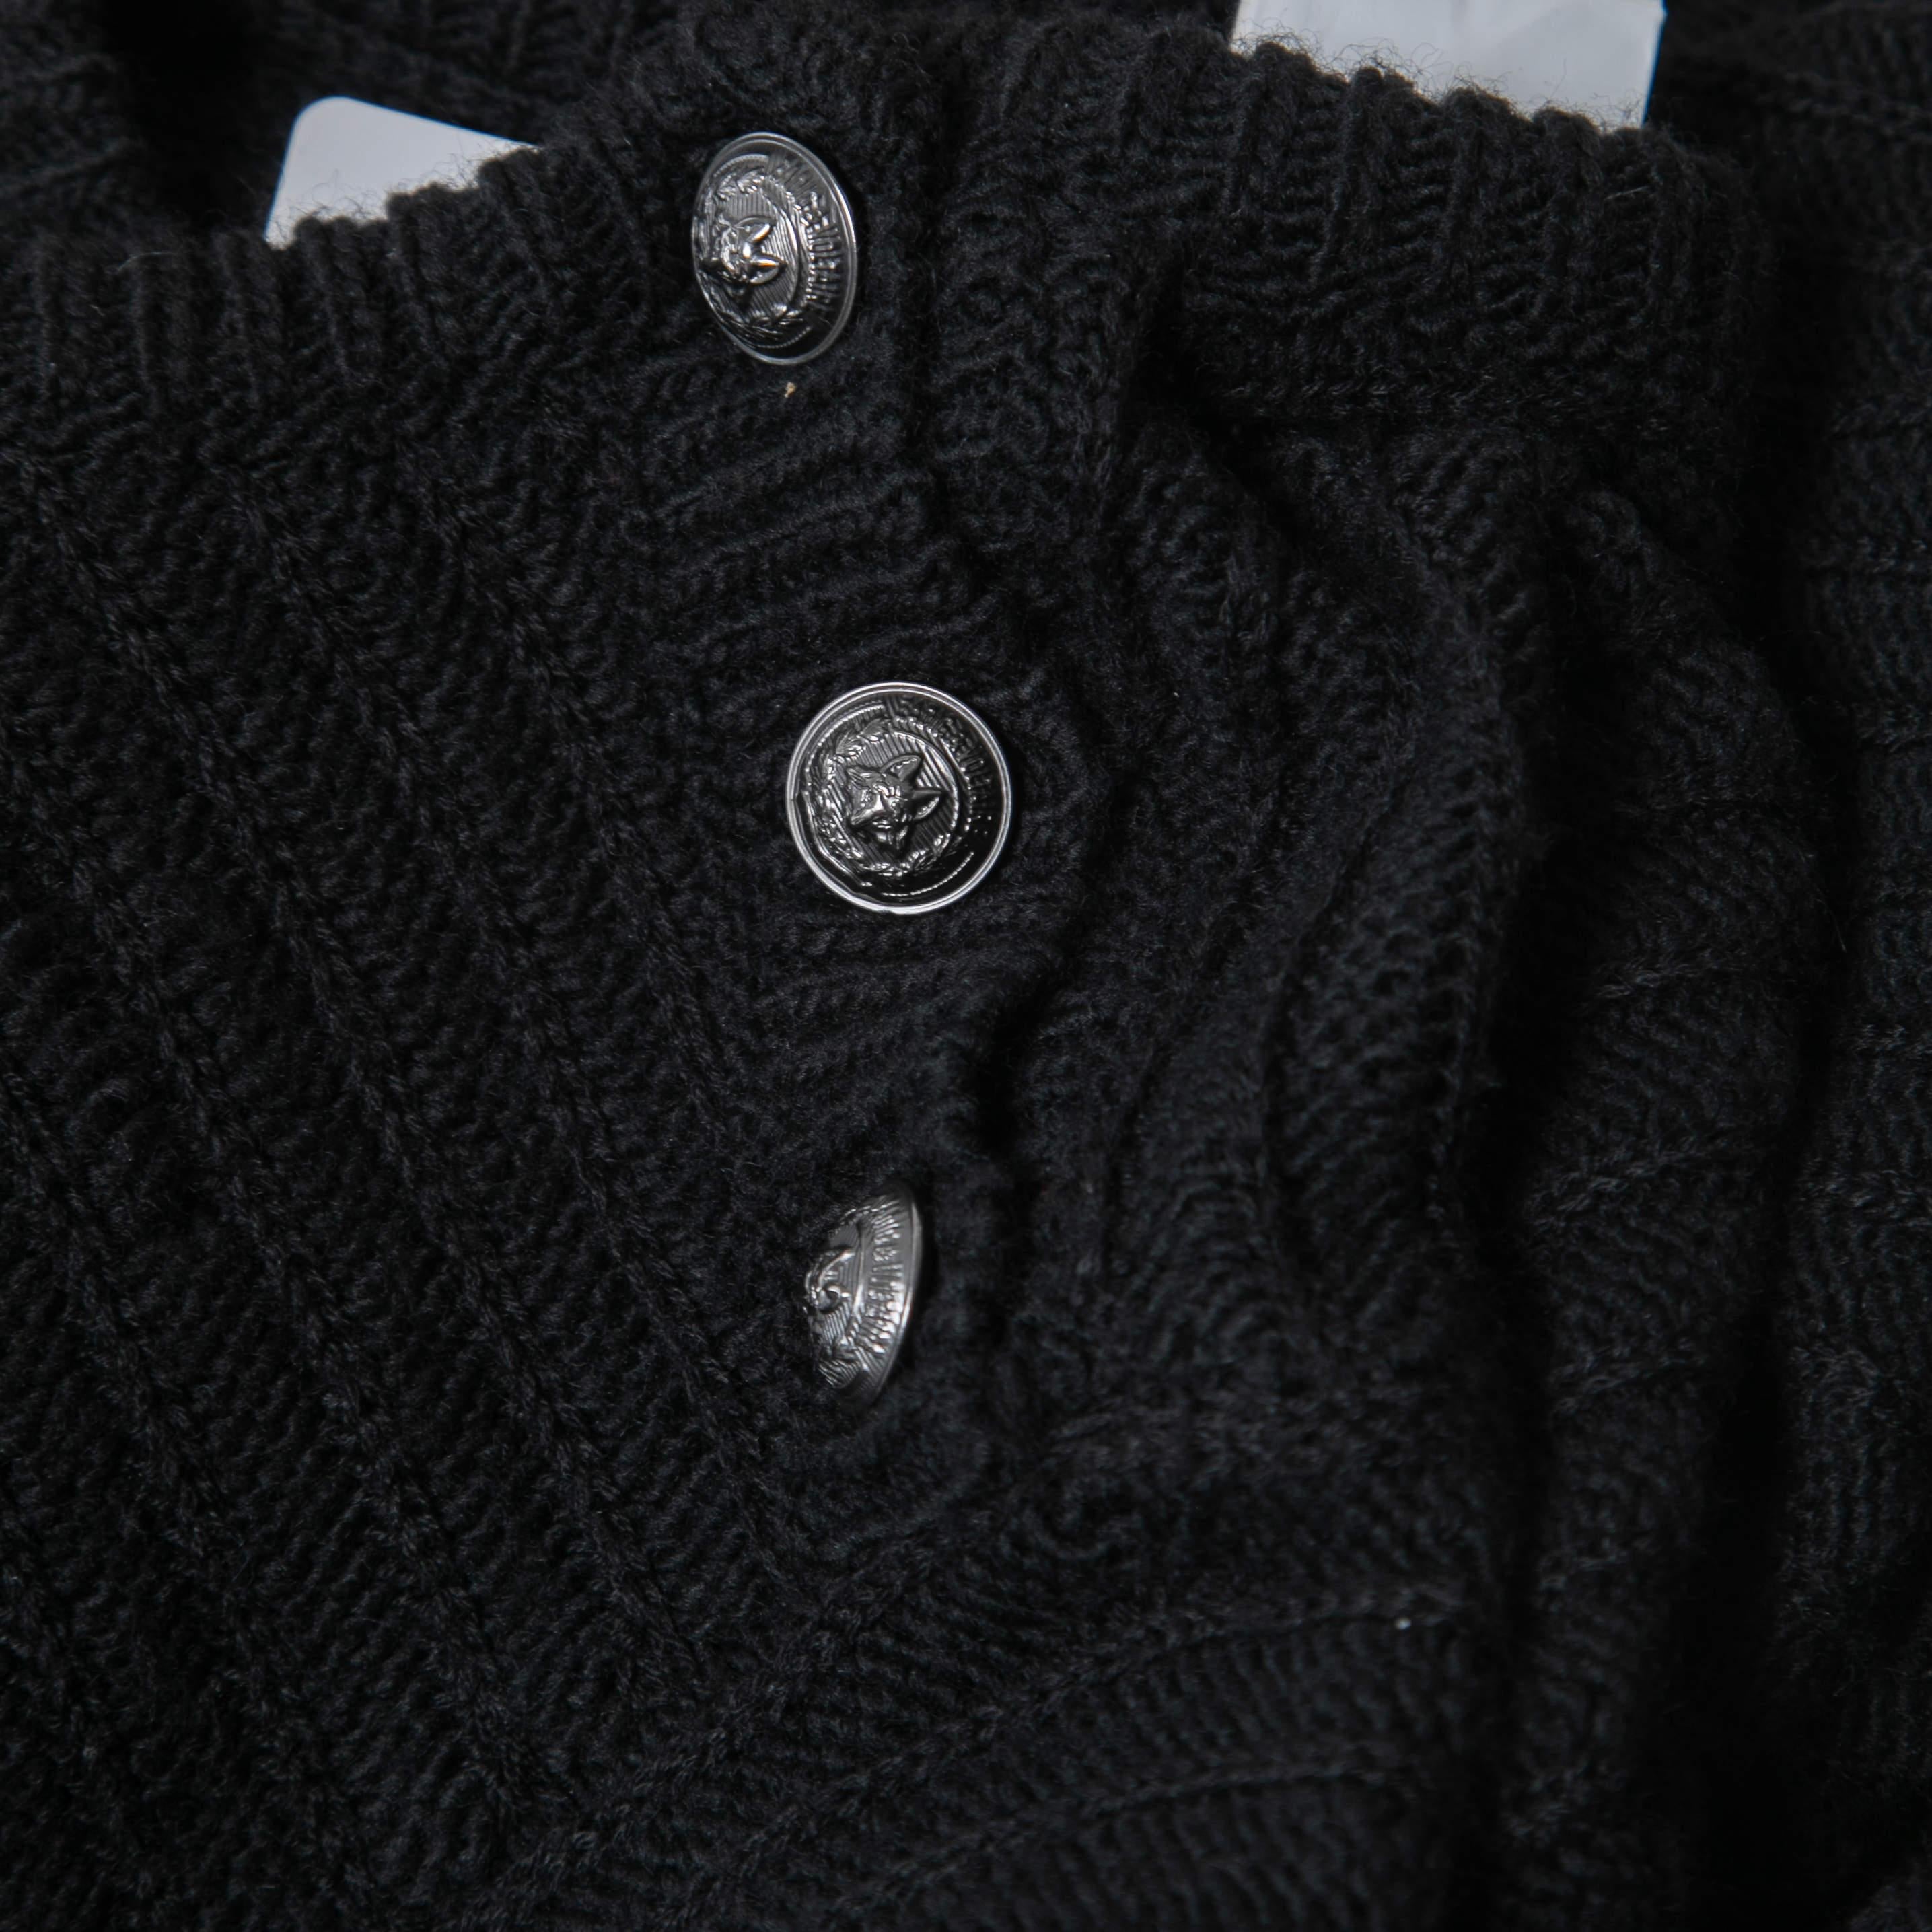 Zadig & Voltaire Black Distressed Merino Wool Jeremy Raye Sweater L 2